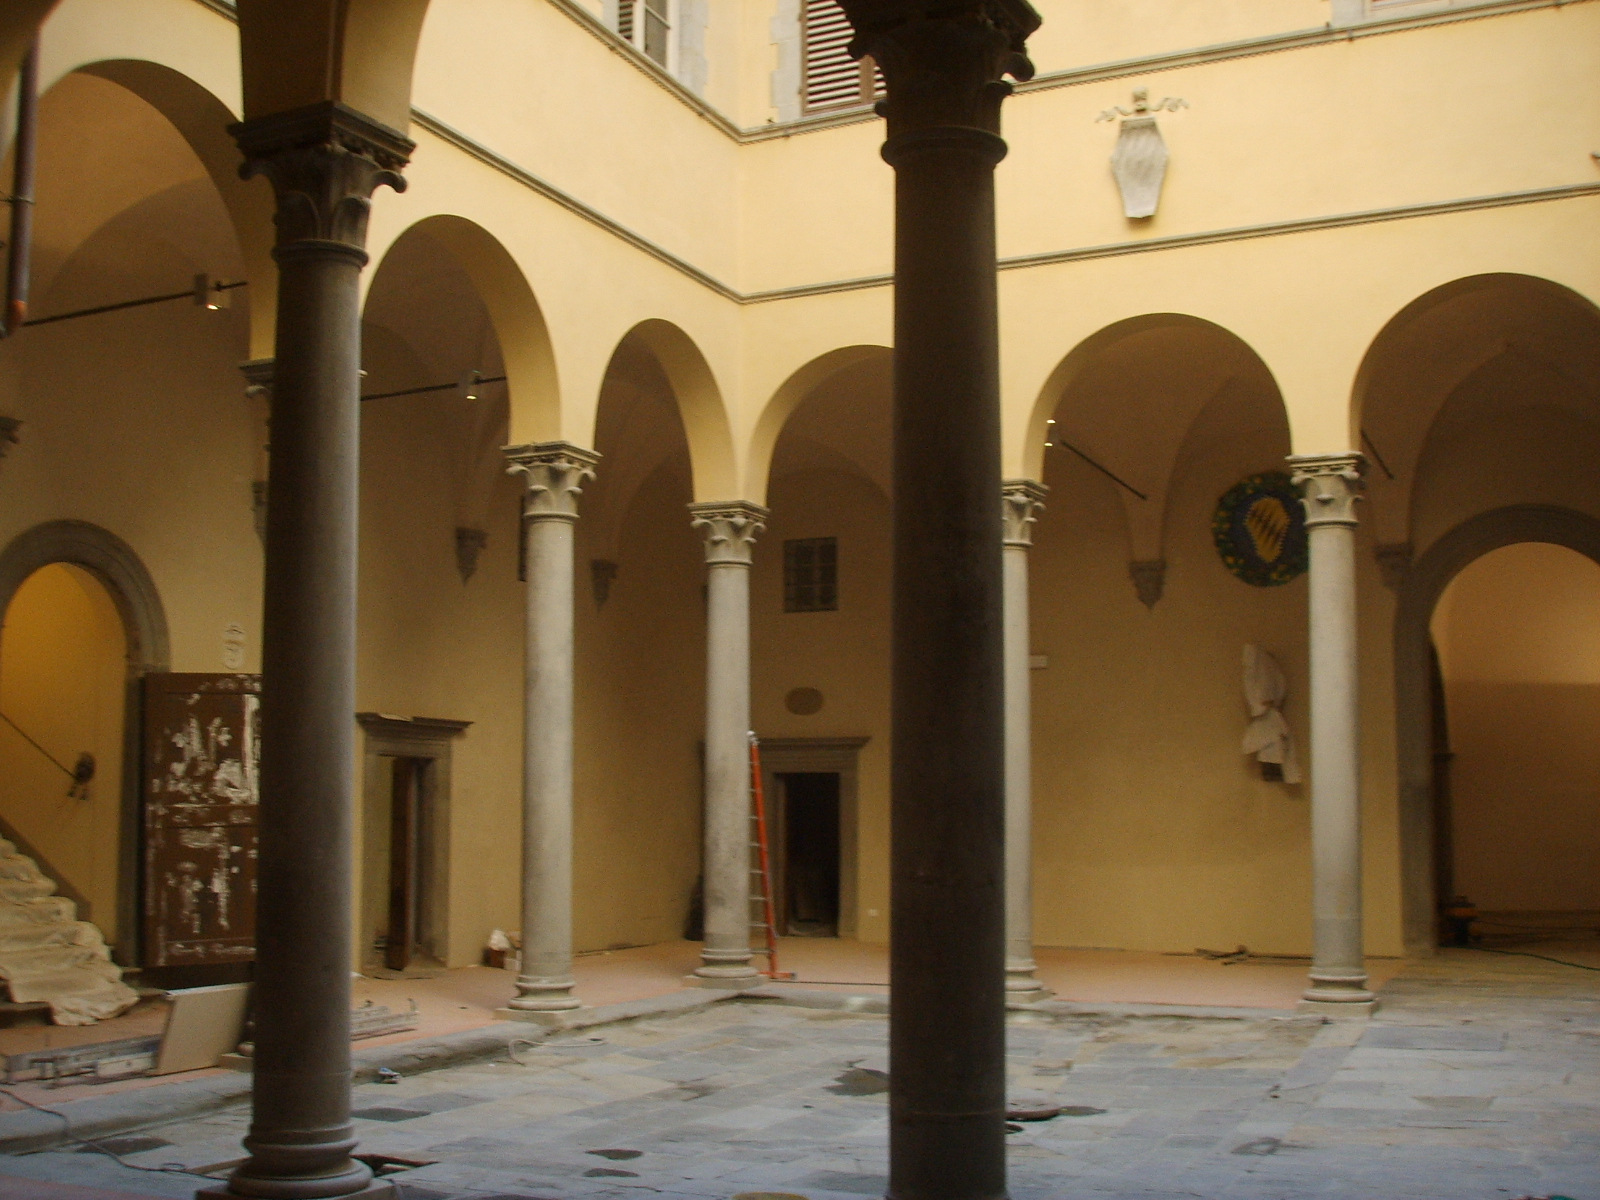 Palazzo-de-Bardi-Brunelleschi-courtyard